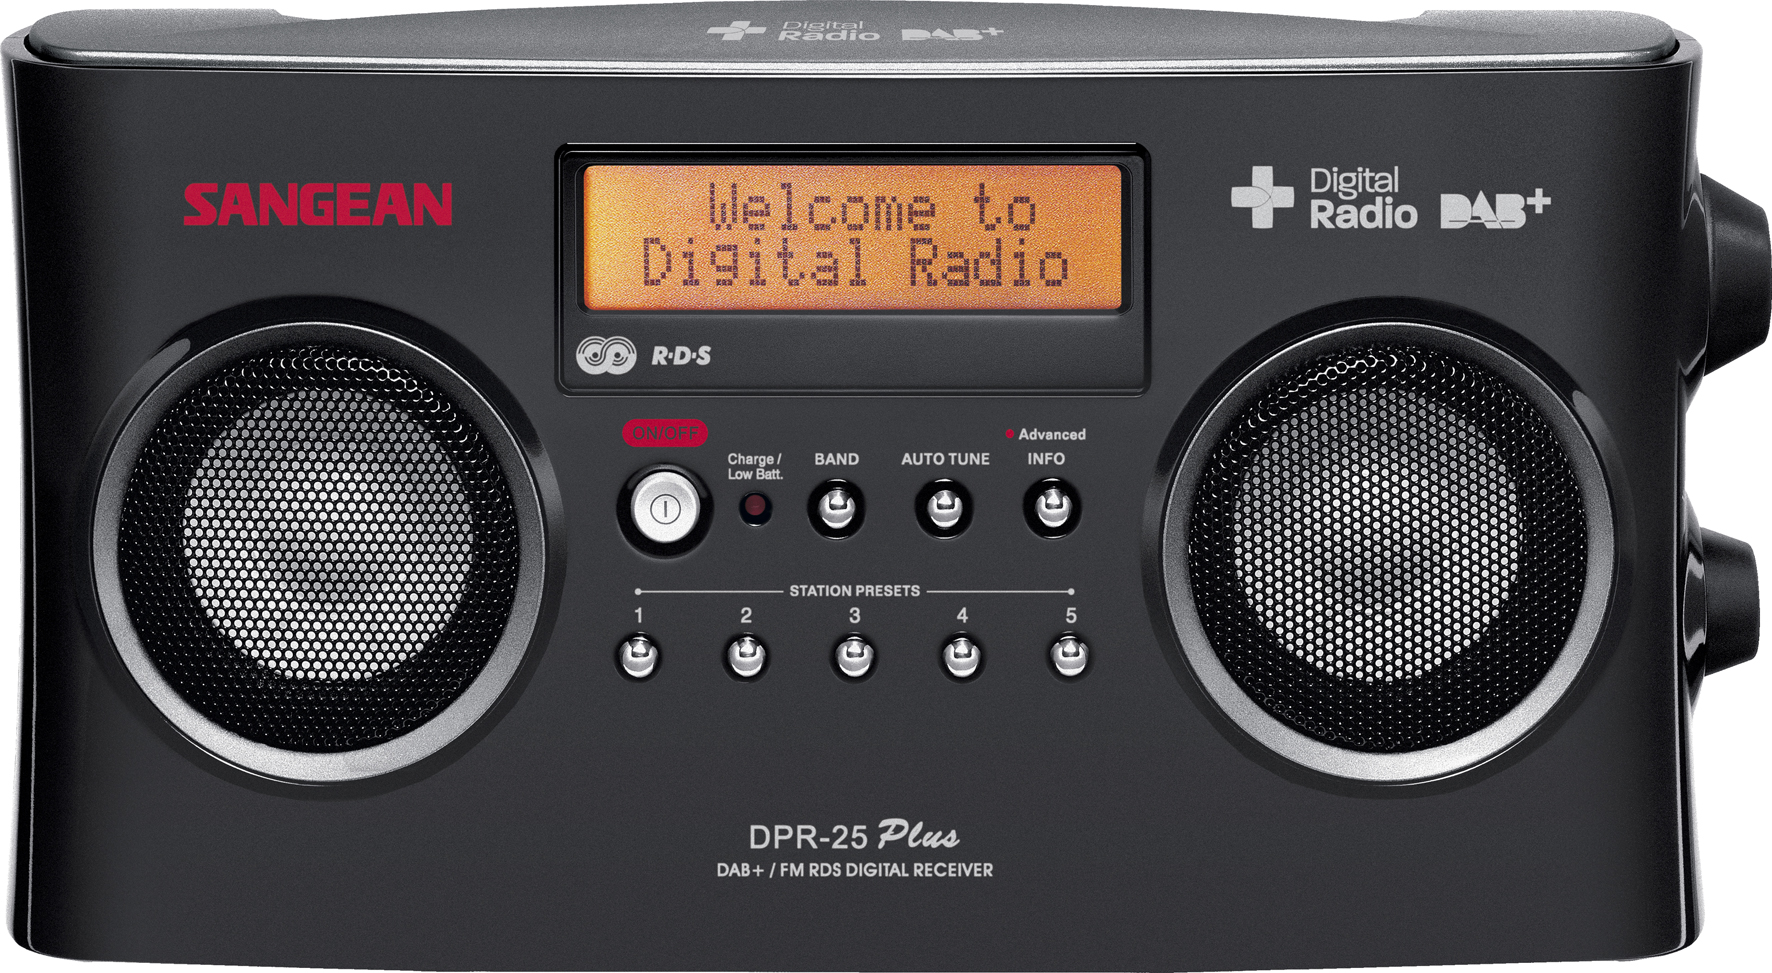 DPR-25+, digitale radio, stereo, DAB+, black